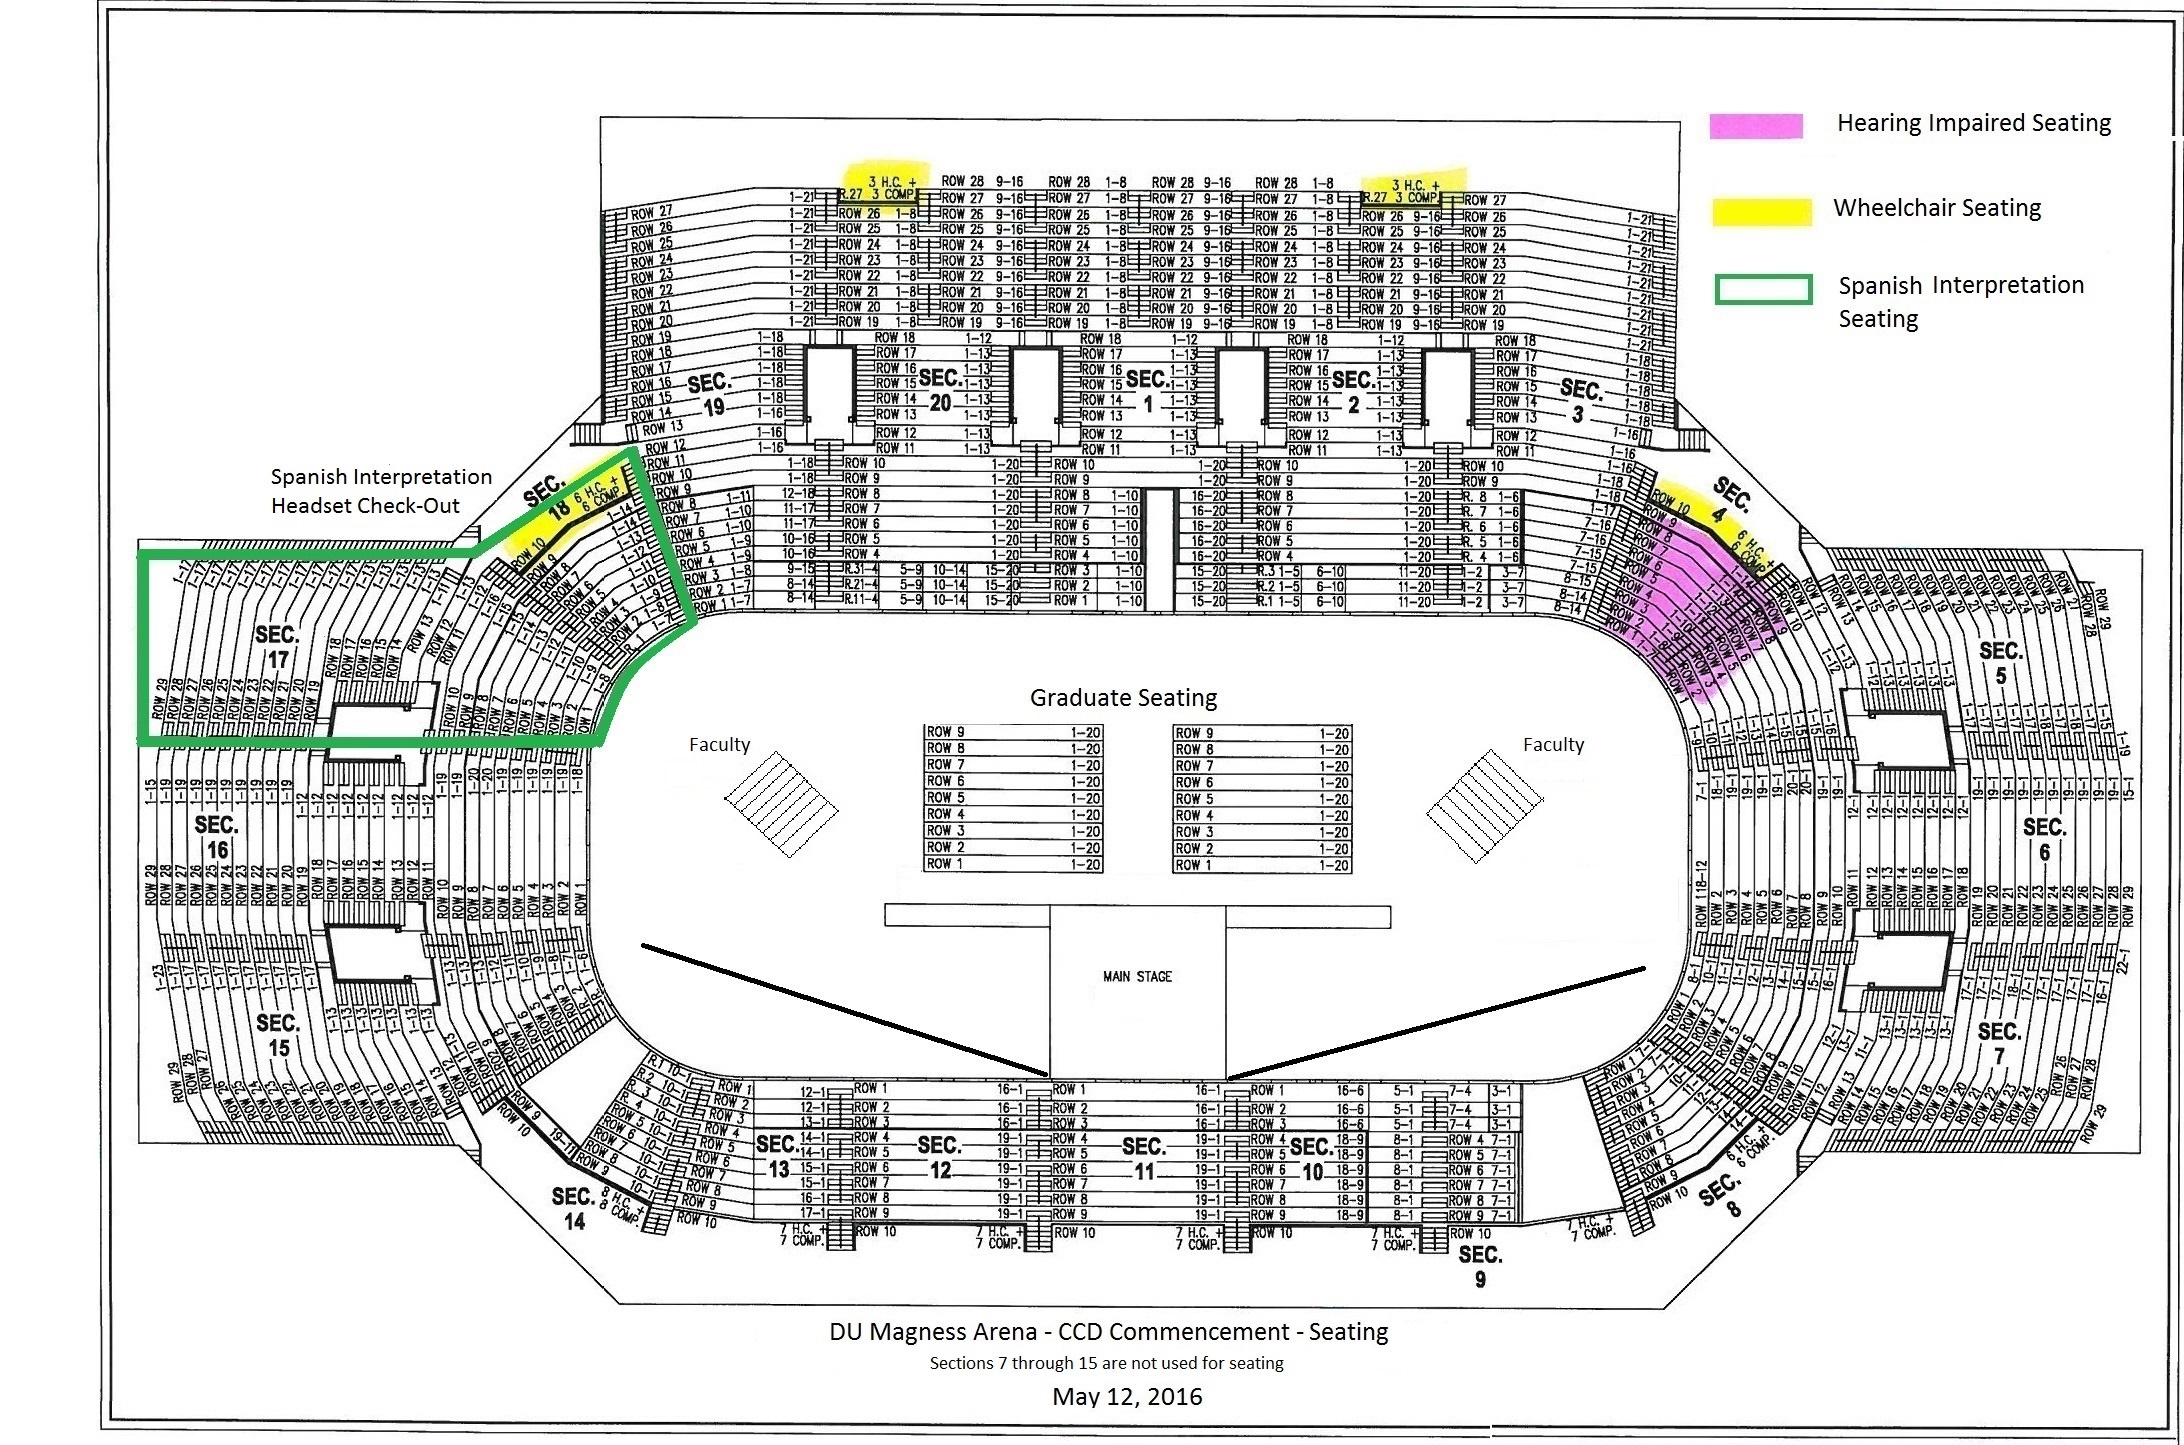 DU's Magness Arena Seating Diagram